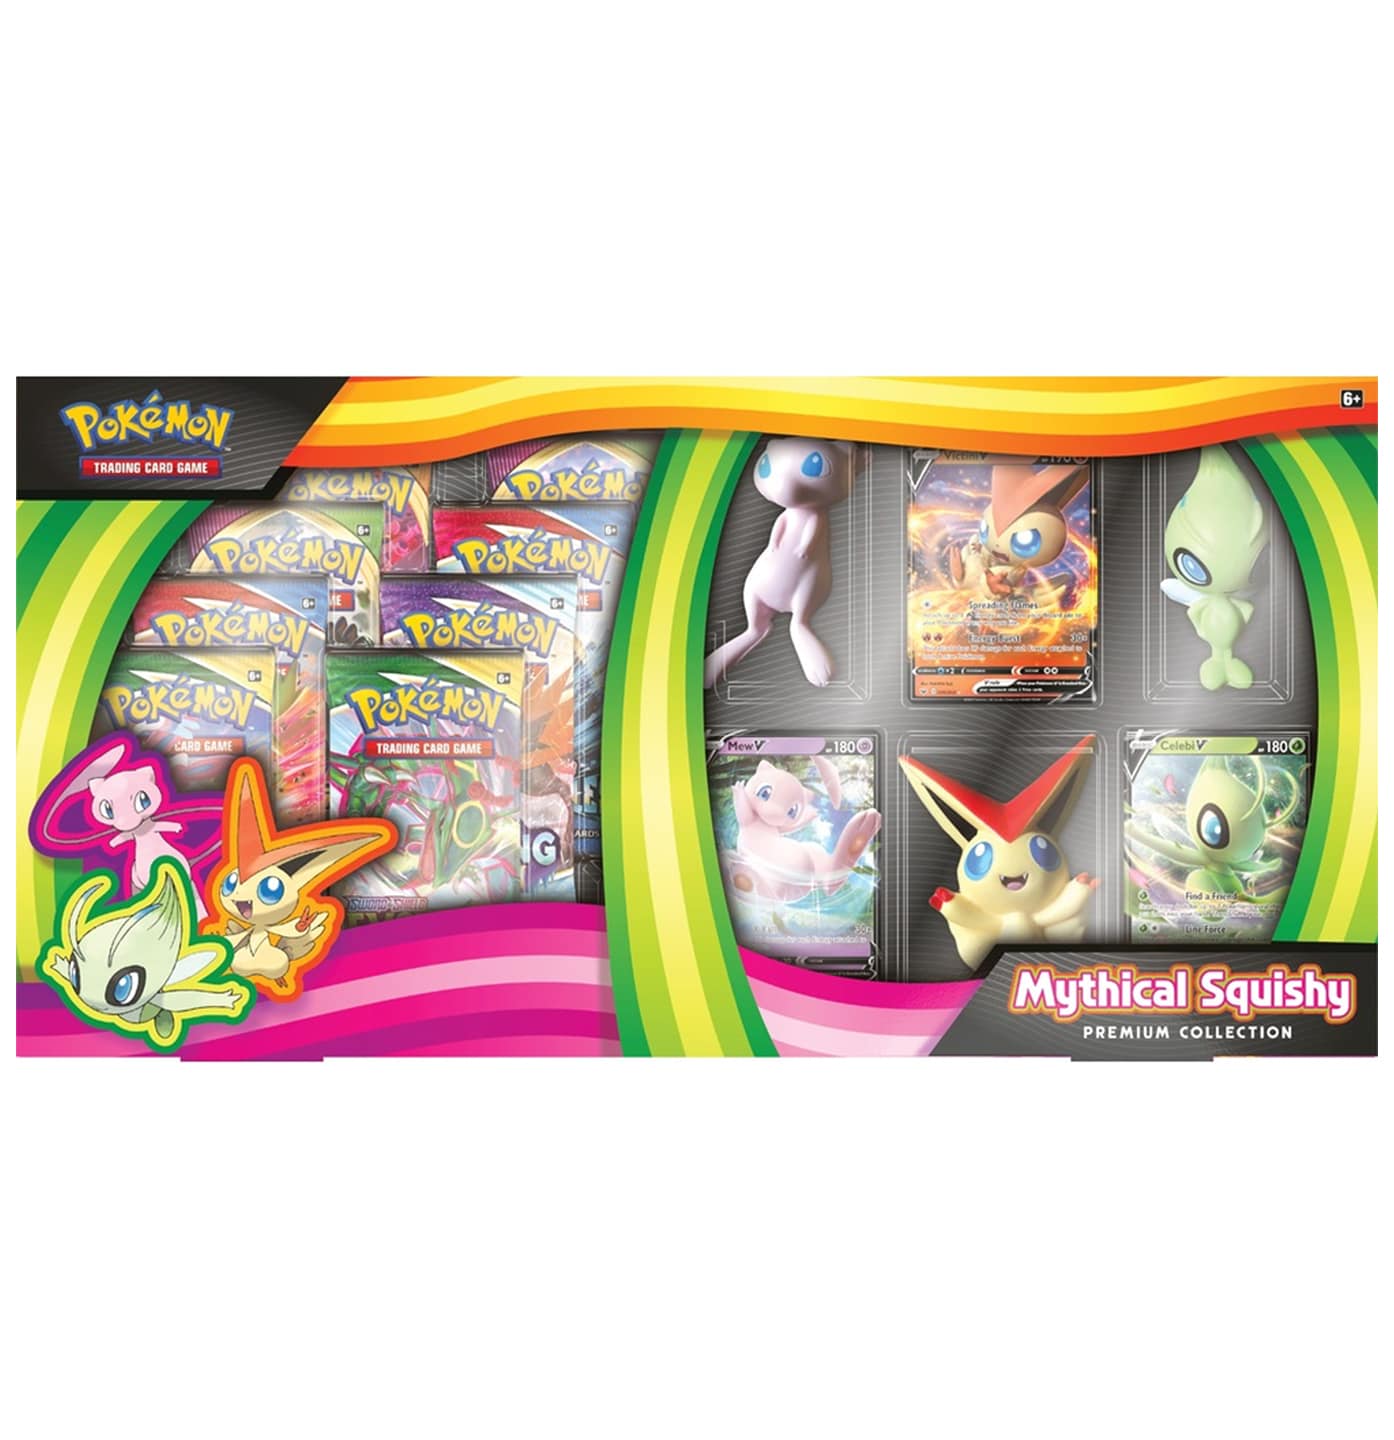 Pokémon Mythical Squishy Premium Collection Box - EN